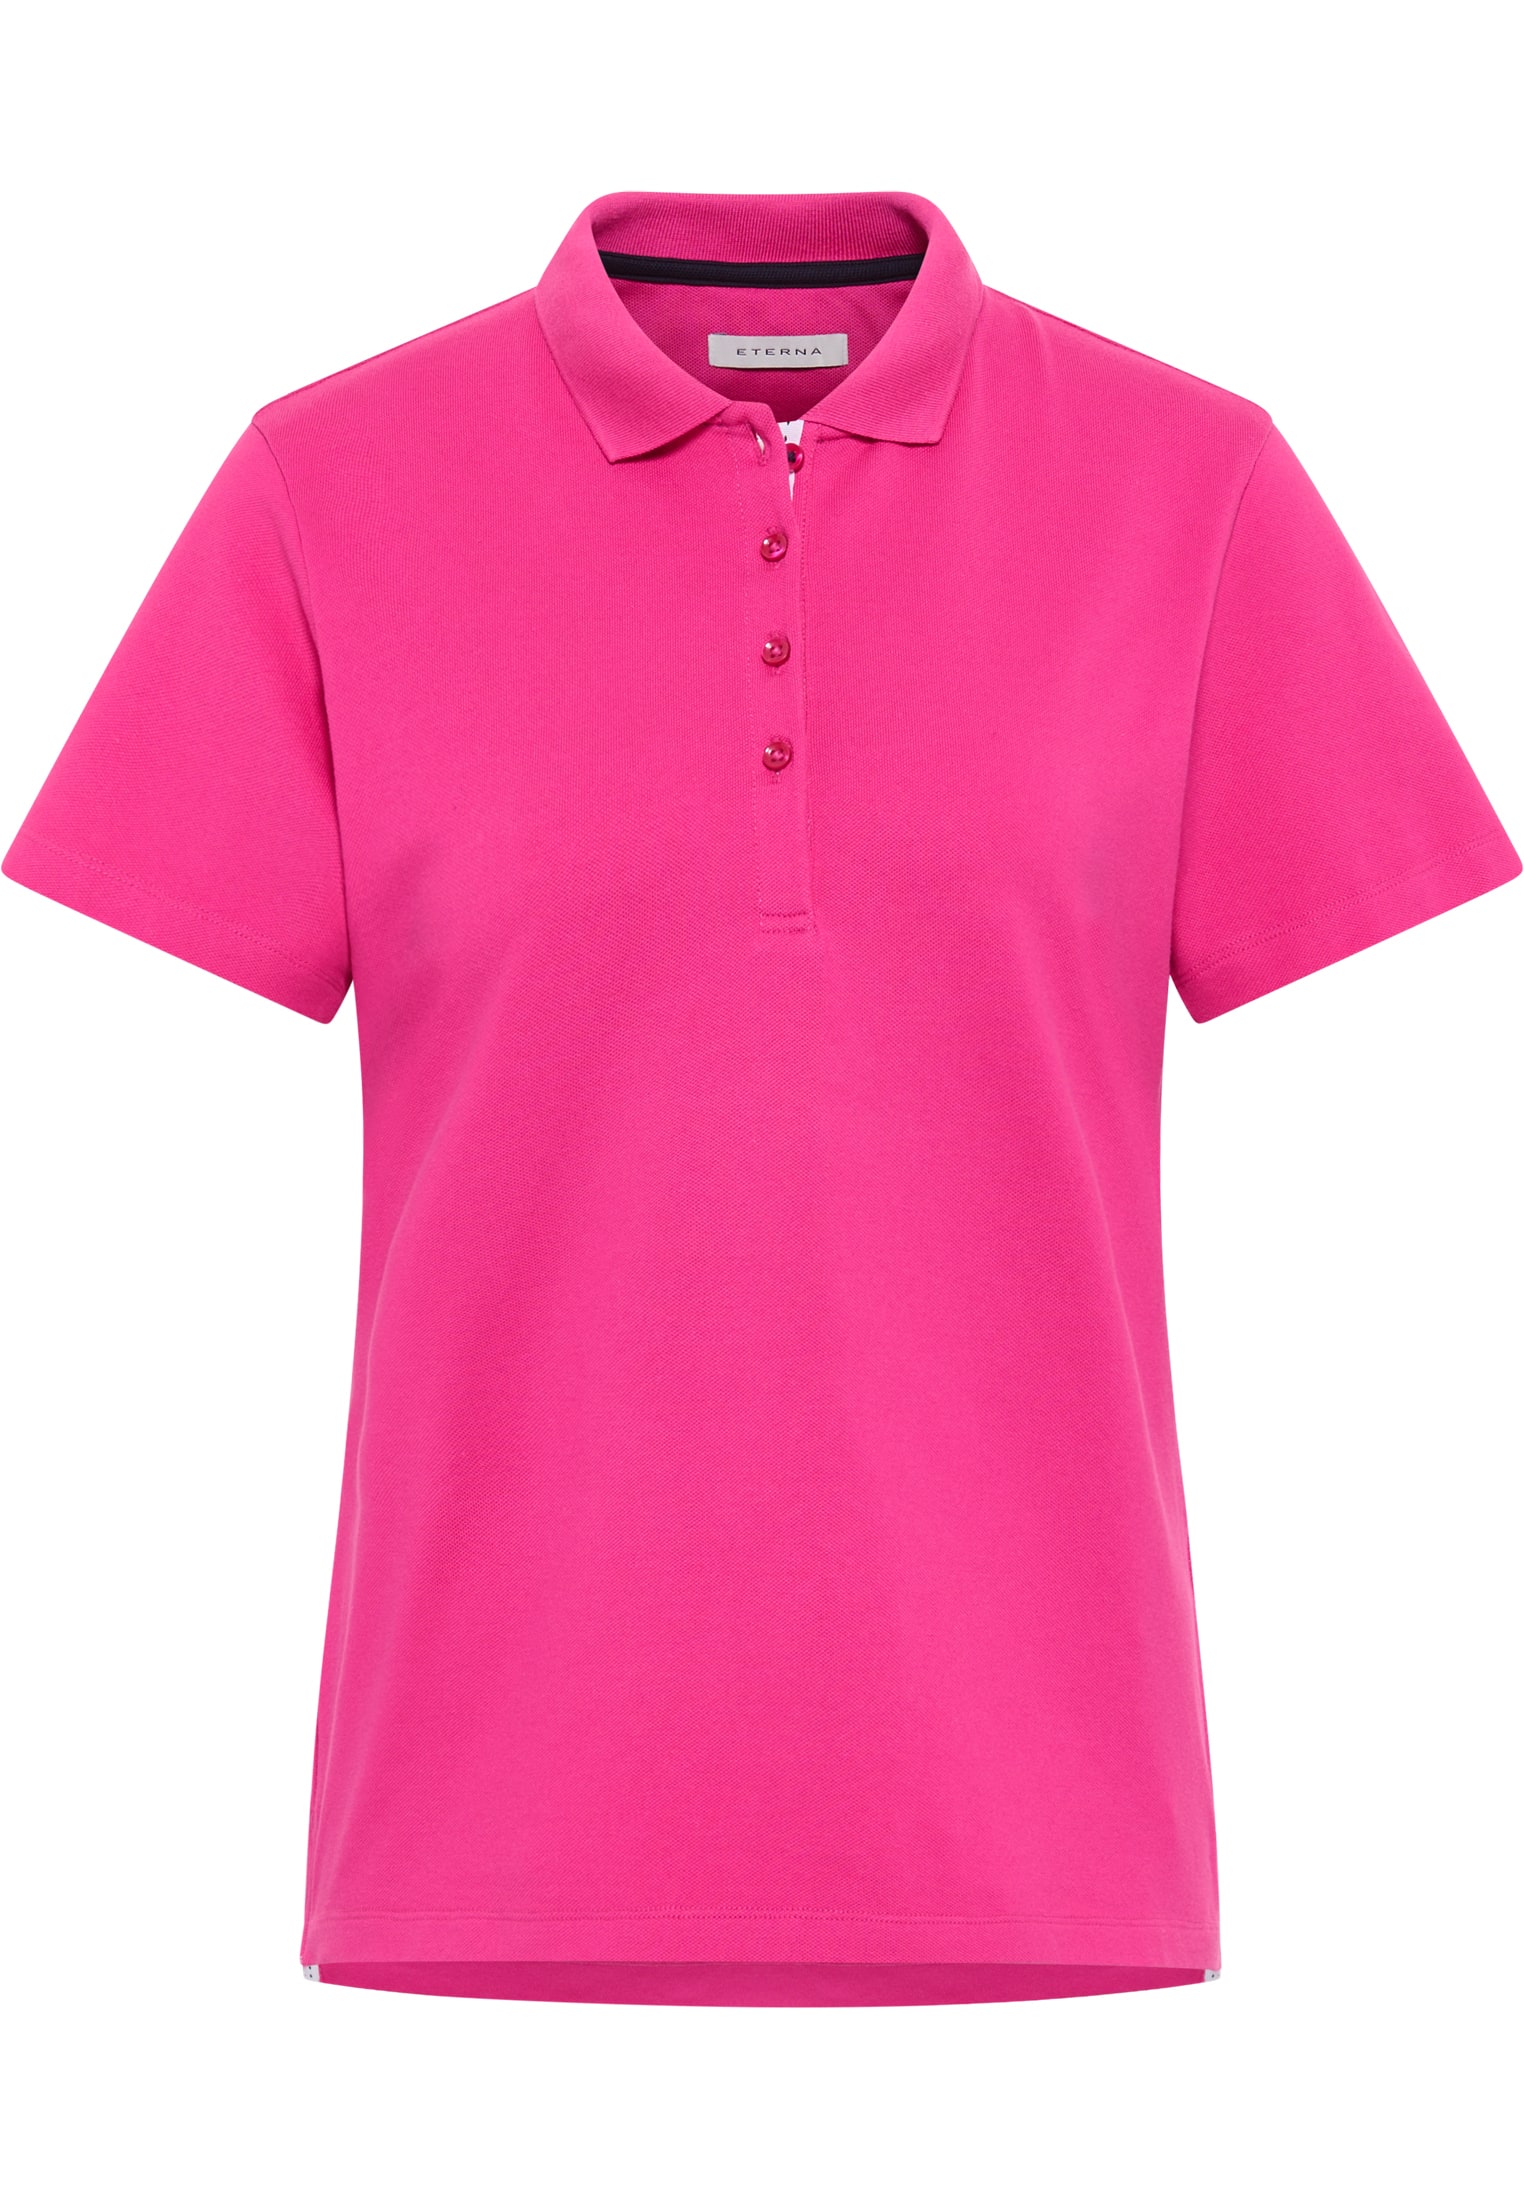 Poloshirt in pink unifarben | pink | 42 | Kurzarm | 2SP00020-15-21-42-1/2